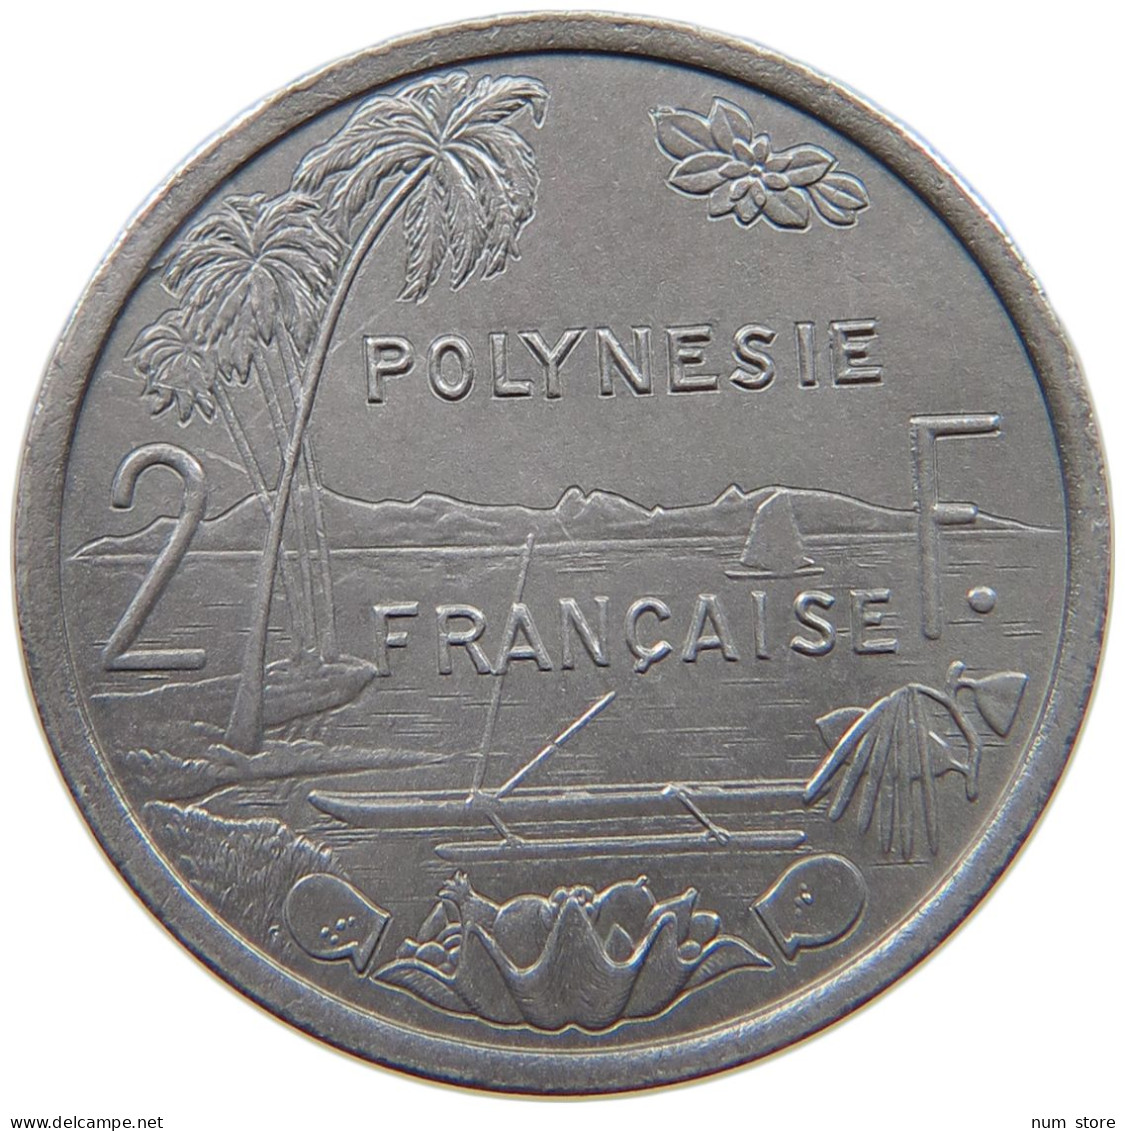 POLYNESIA 2 FRANCS 1977  #a053 0629 - Französisch-Polynesien